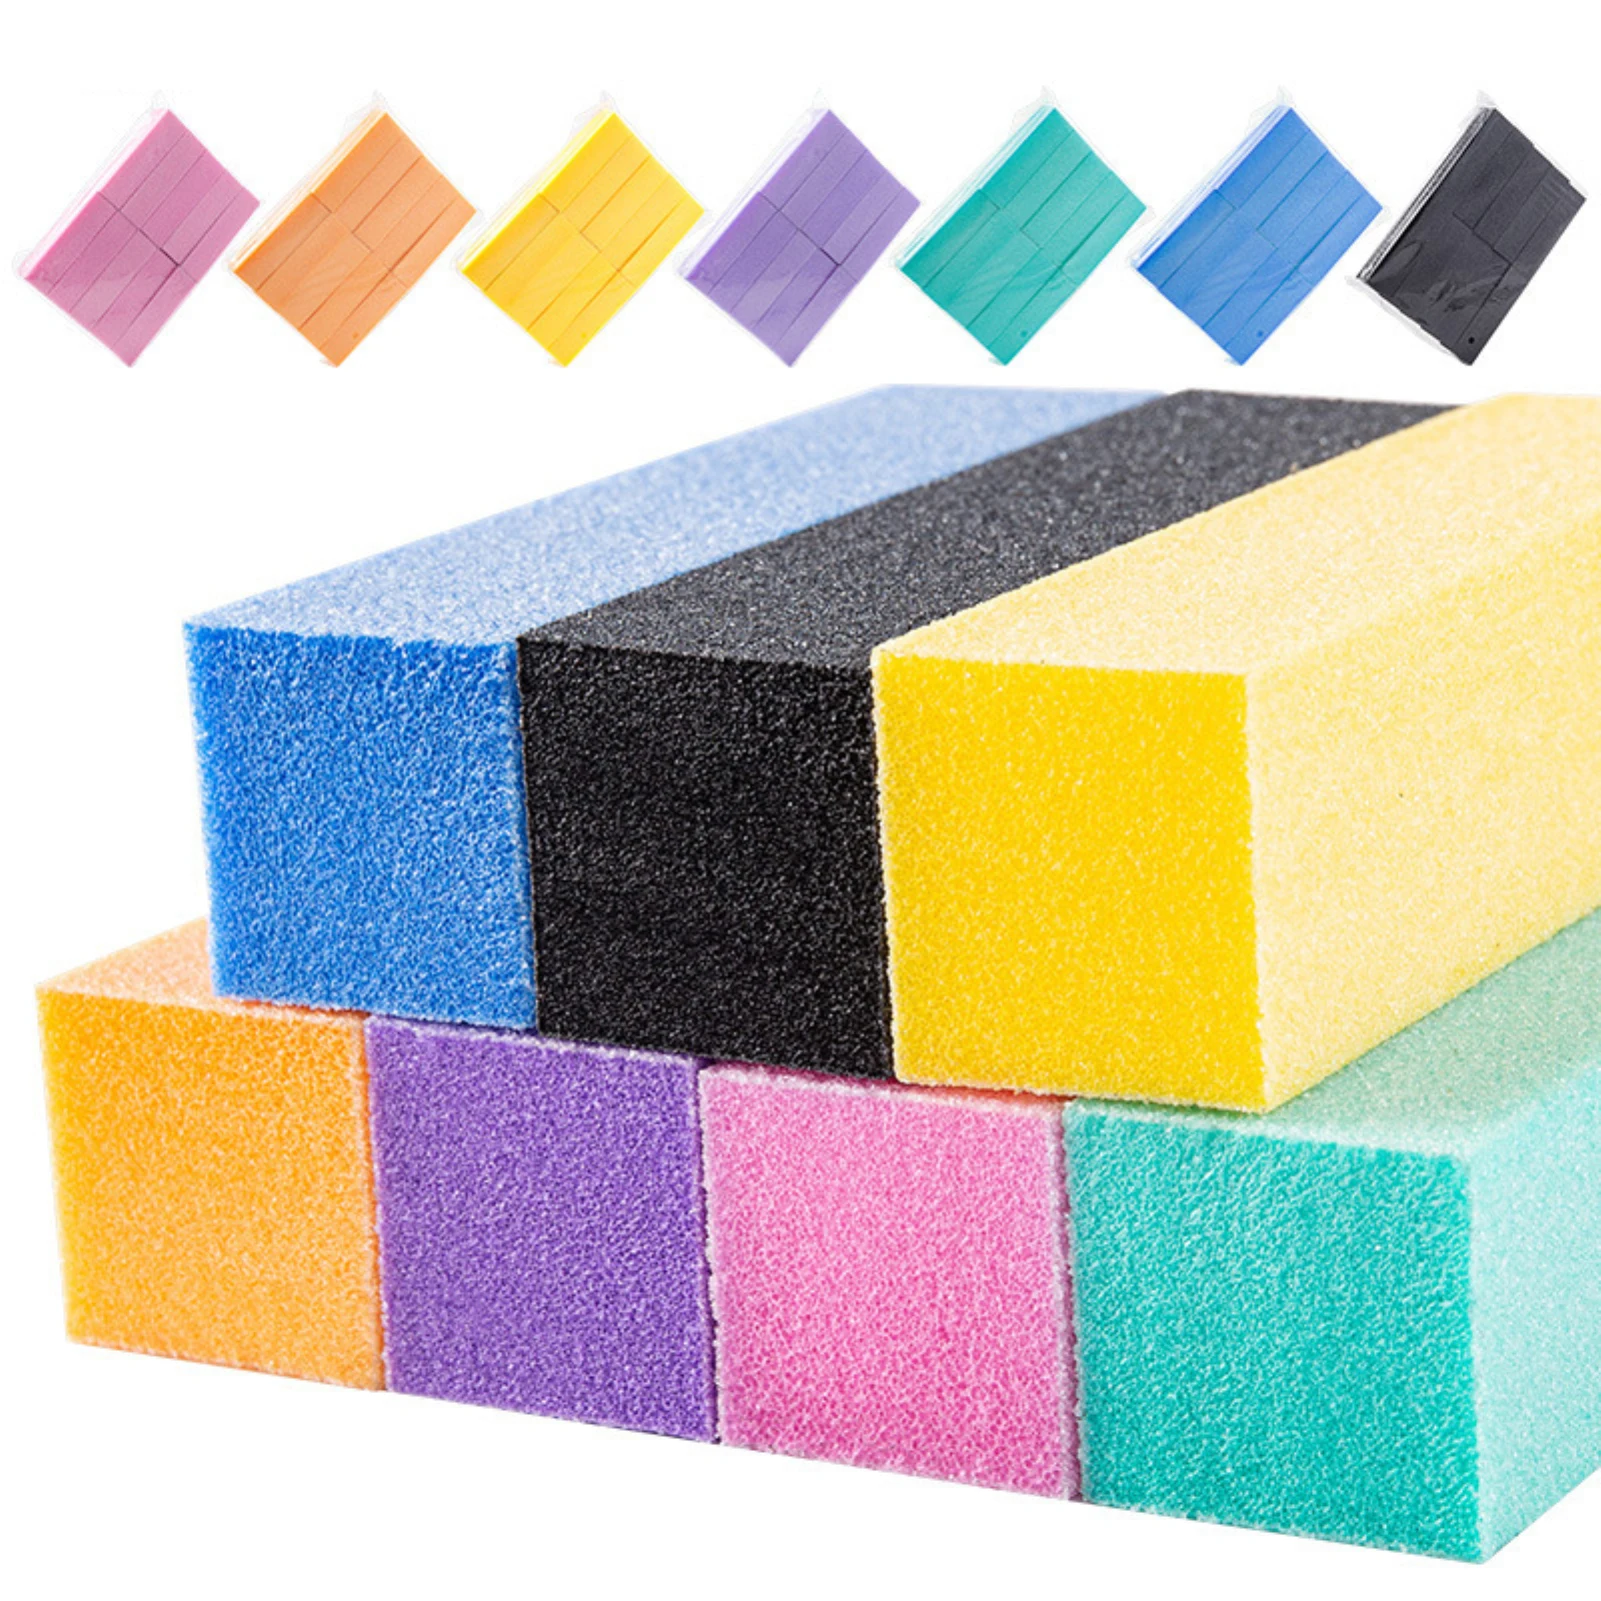 2023 Double-sided Nail File Blocks Colorful Sponge Nail Polish Sanding Buffer Strips Polishing Manicure Tools Nails Accessories